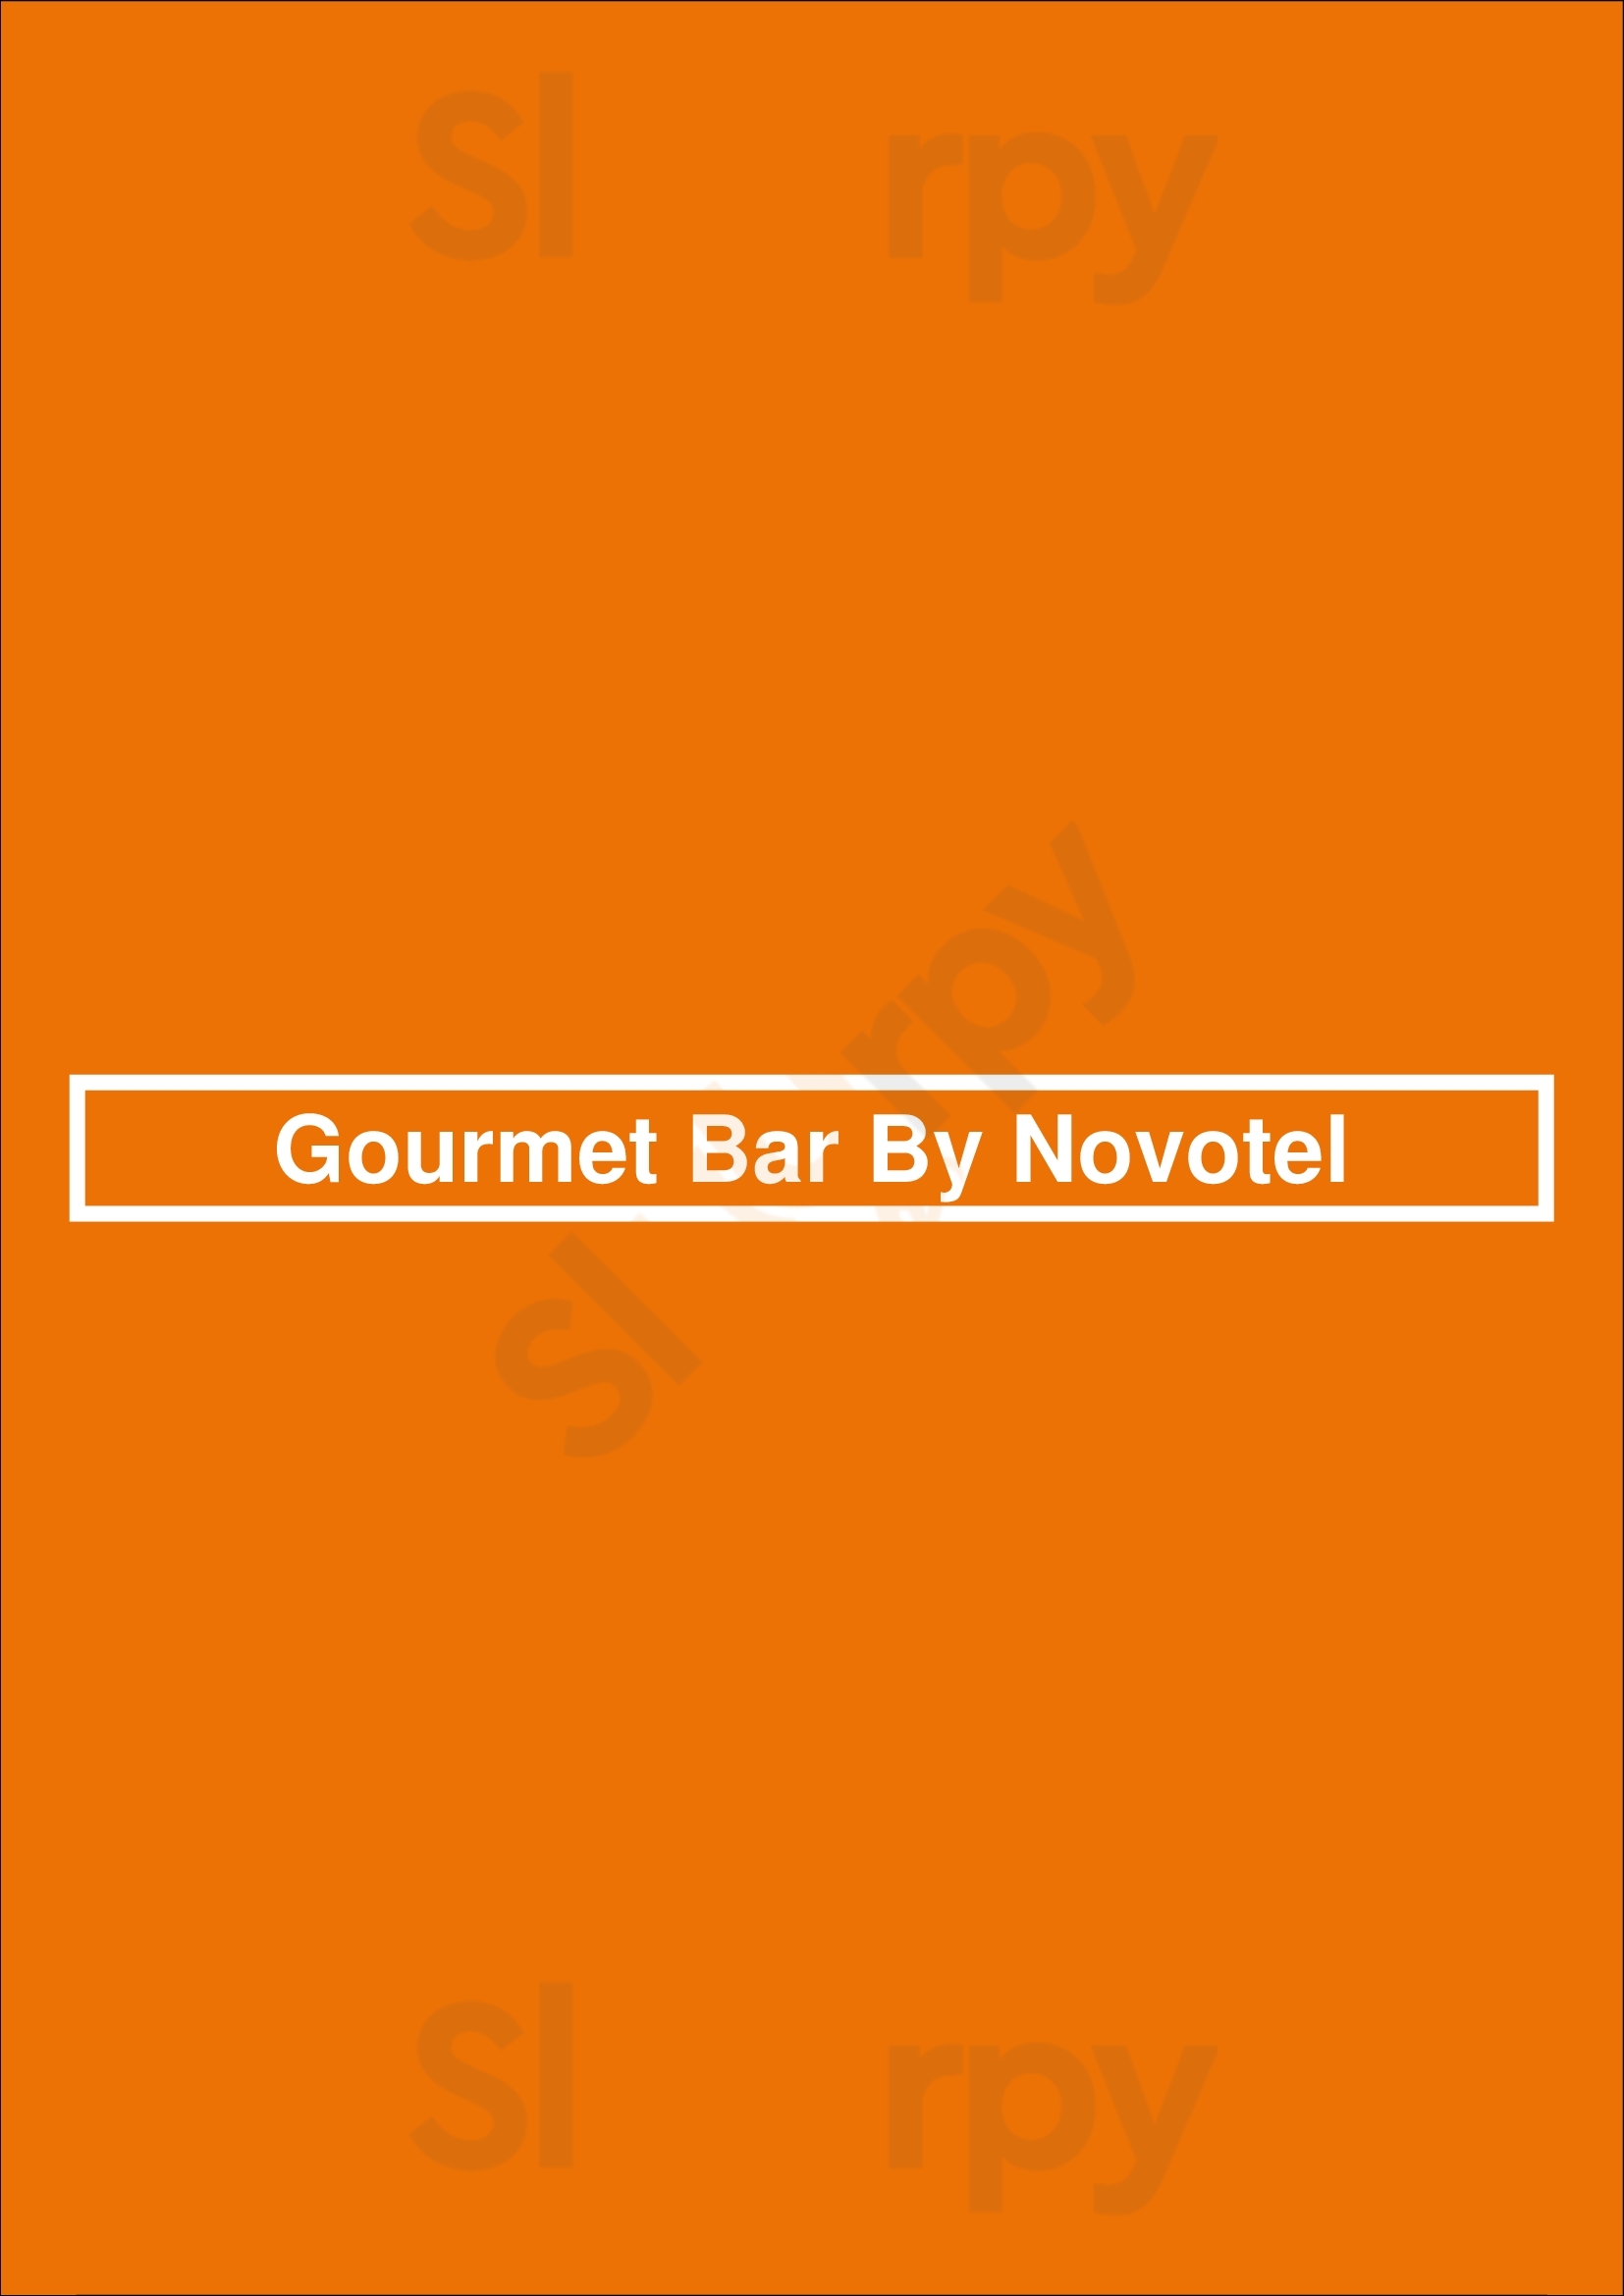 Gourmet Bar By Novotel Metz Menu - 1